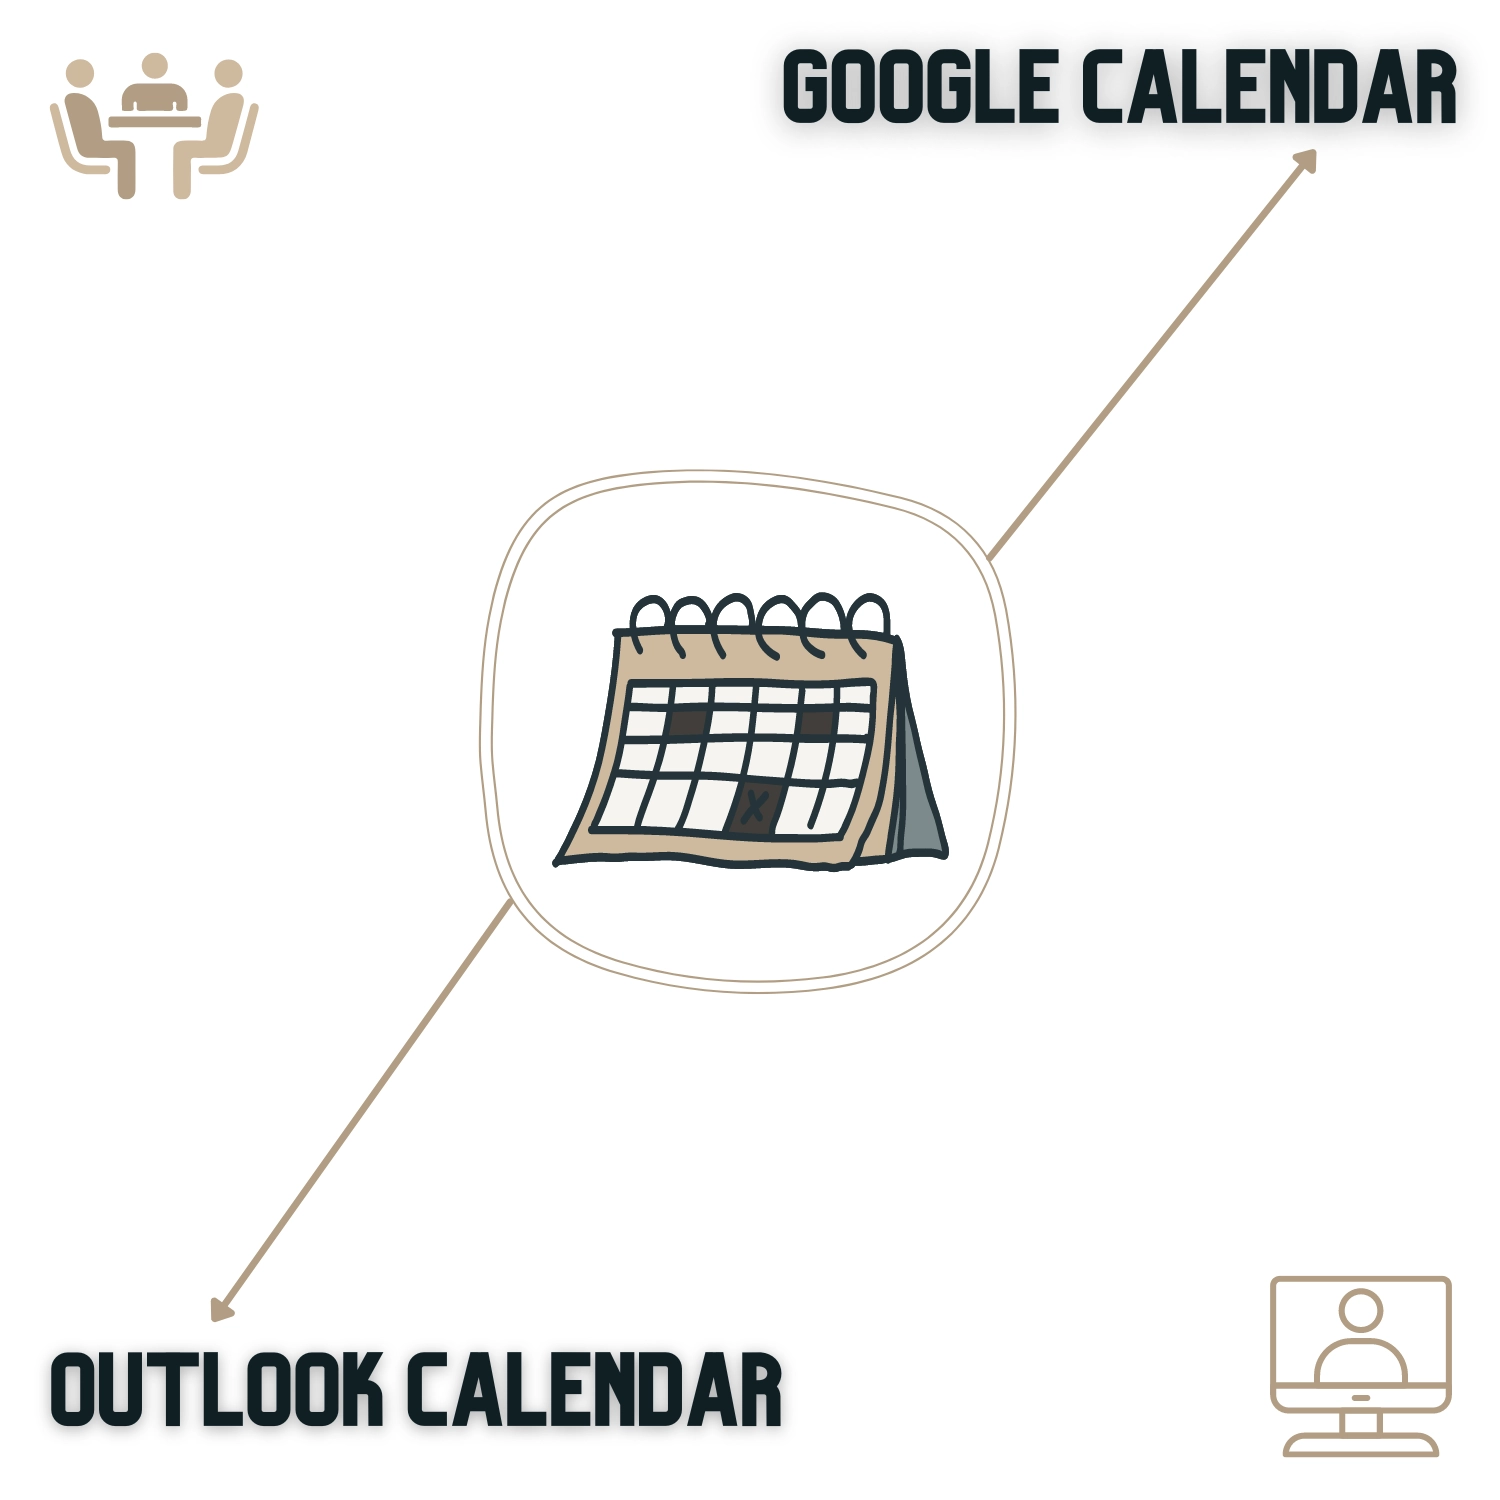 Google Calendar vs. Outlook Calendar